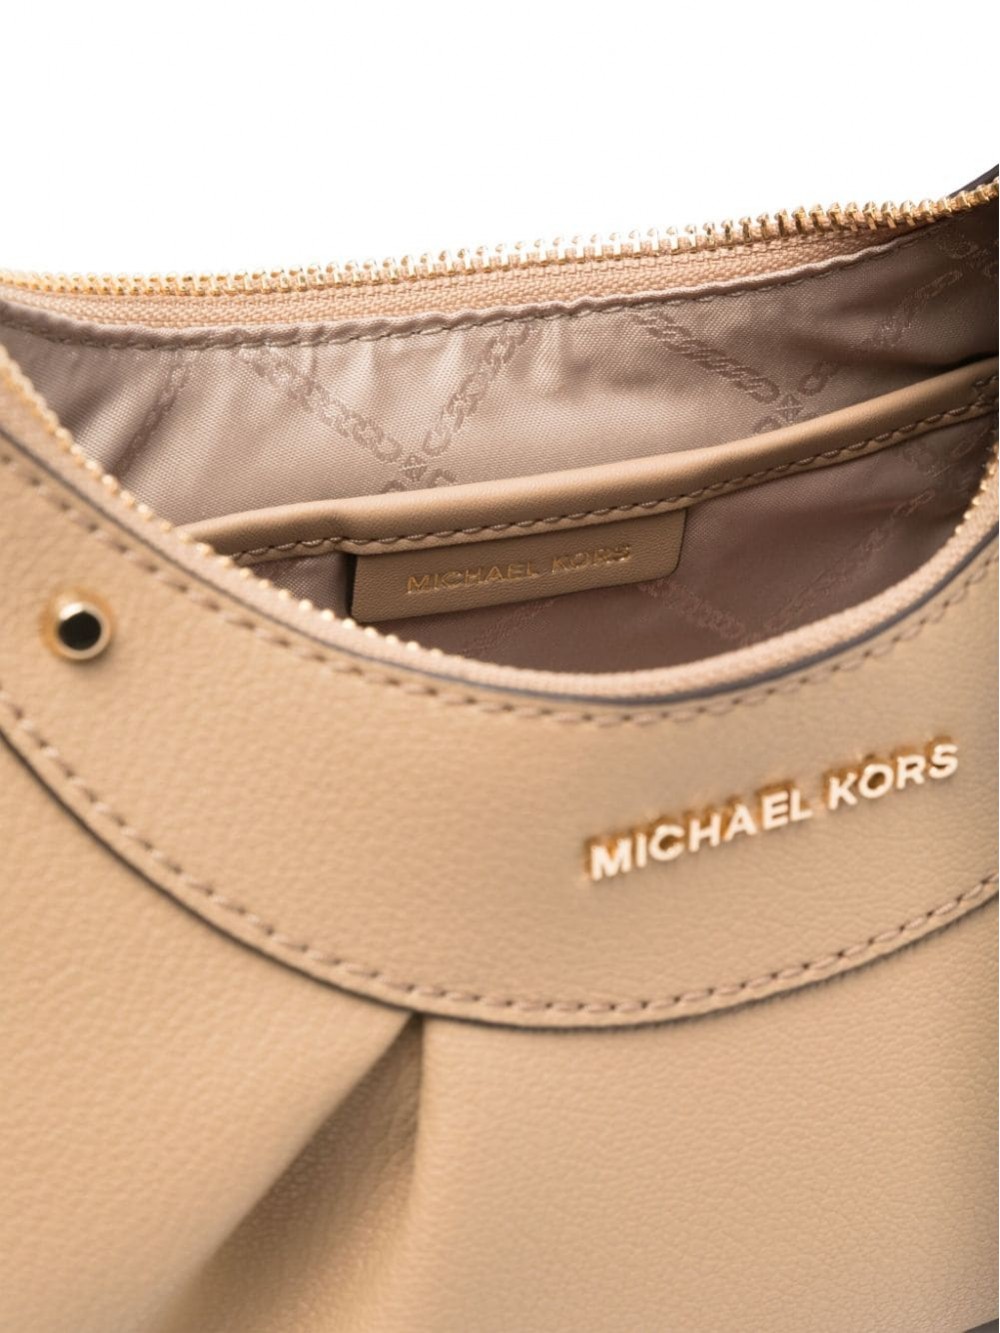 Michael Kors Enzo small beige shoulder bag Home